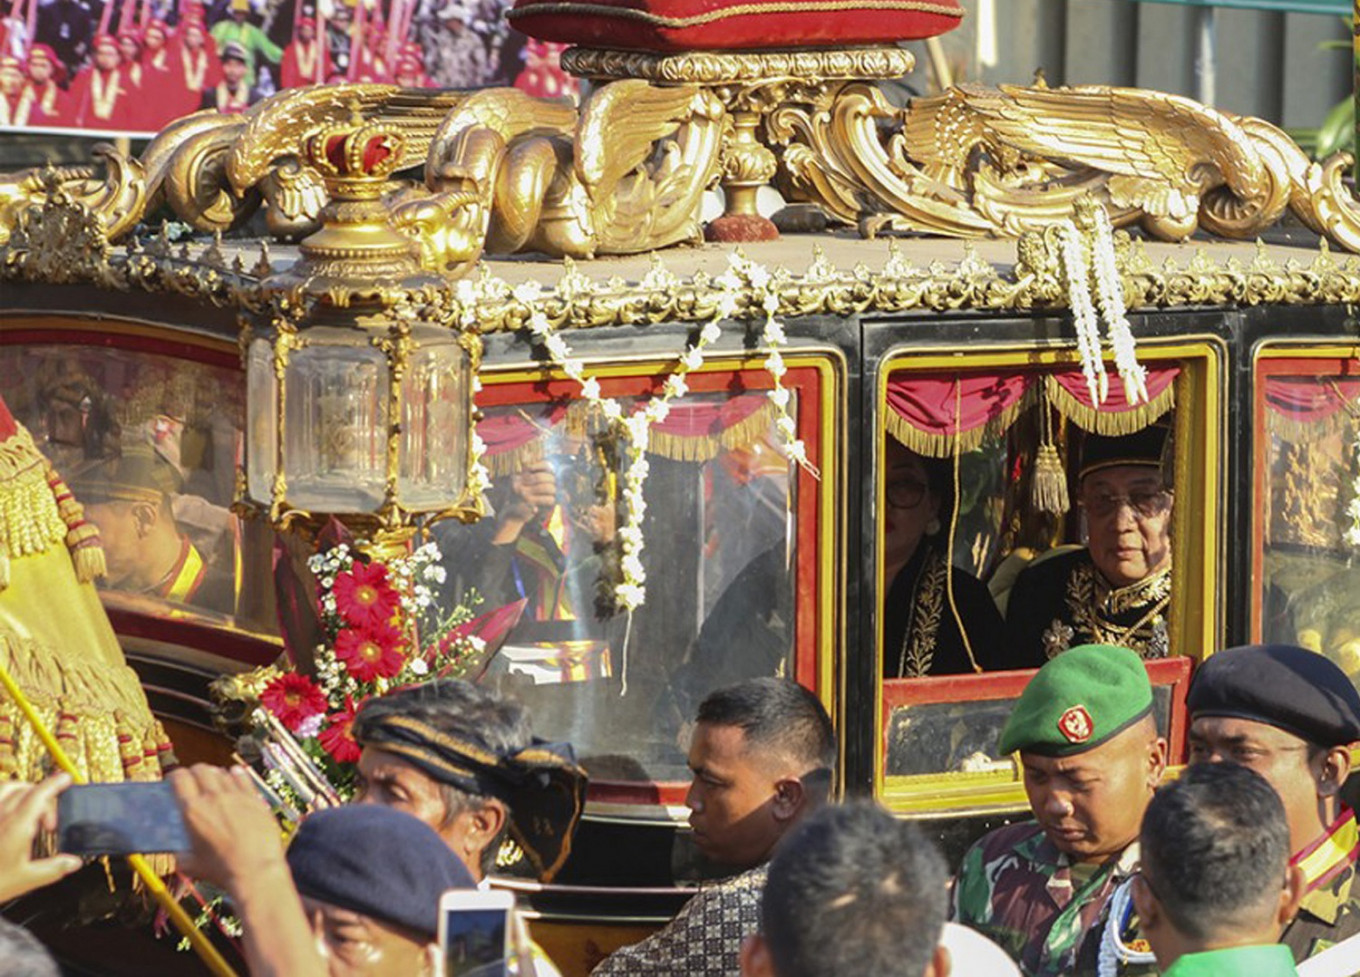 Sultan Paku Buwono diarak menggunakan kereta kuda Kyai Garuda | Foto: Ganug Adi Nugraha / Jakarta Post